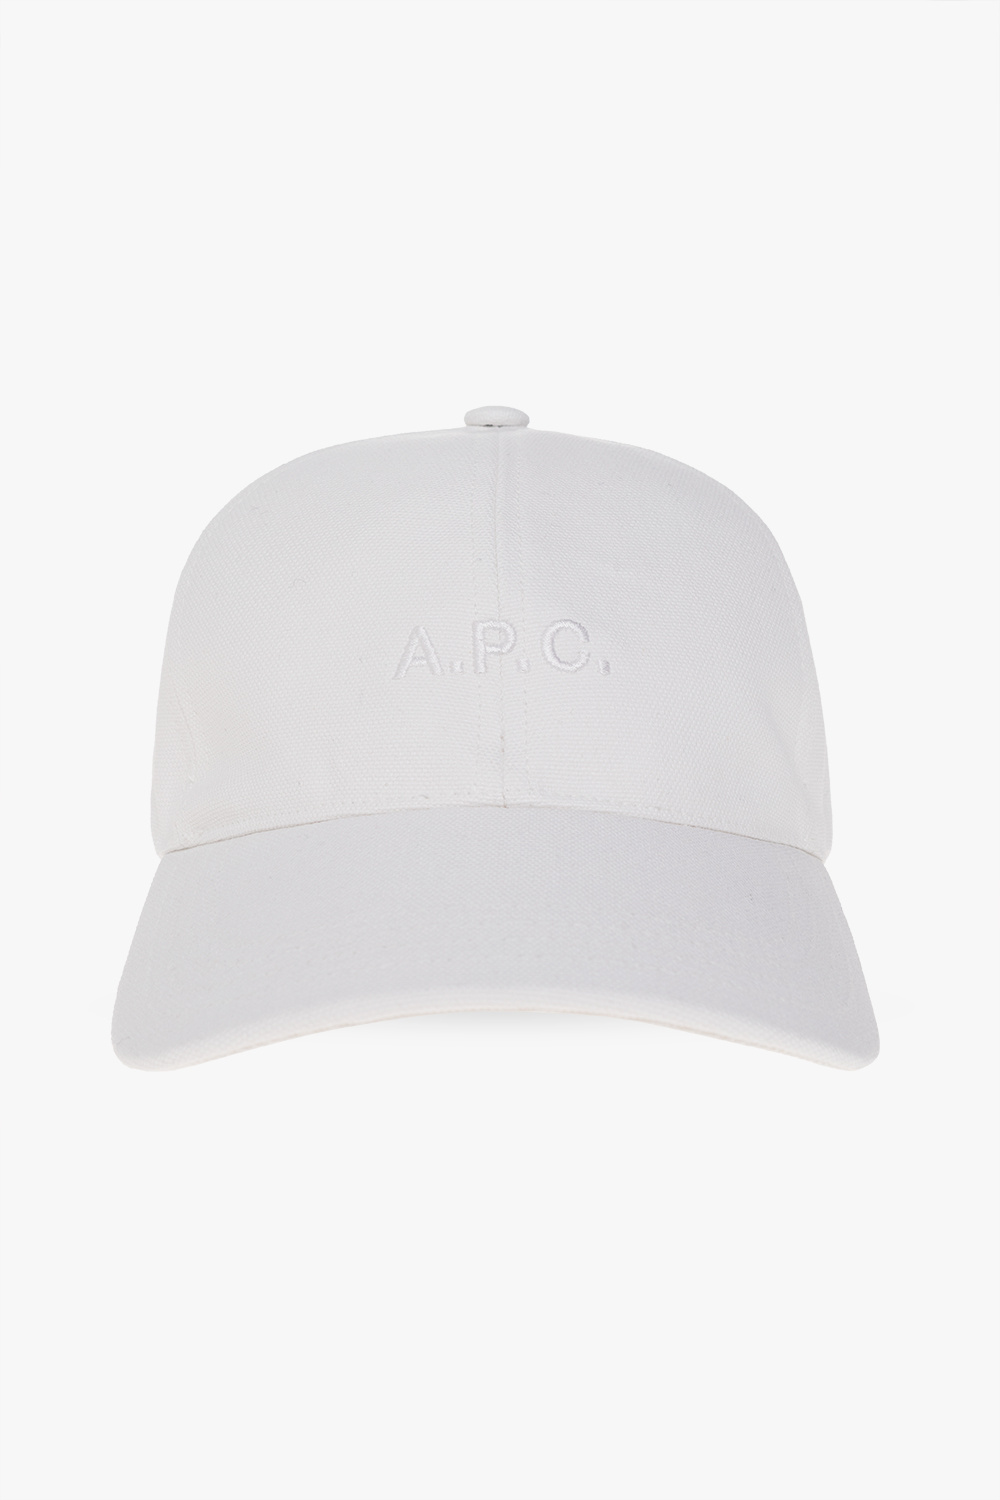 A.P.C. ‘Charlie’ baseball cap